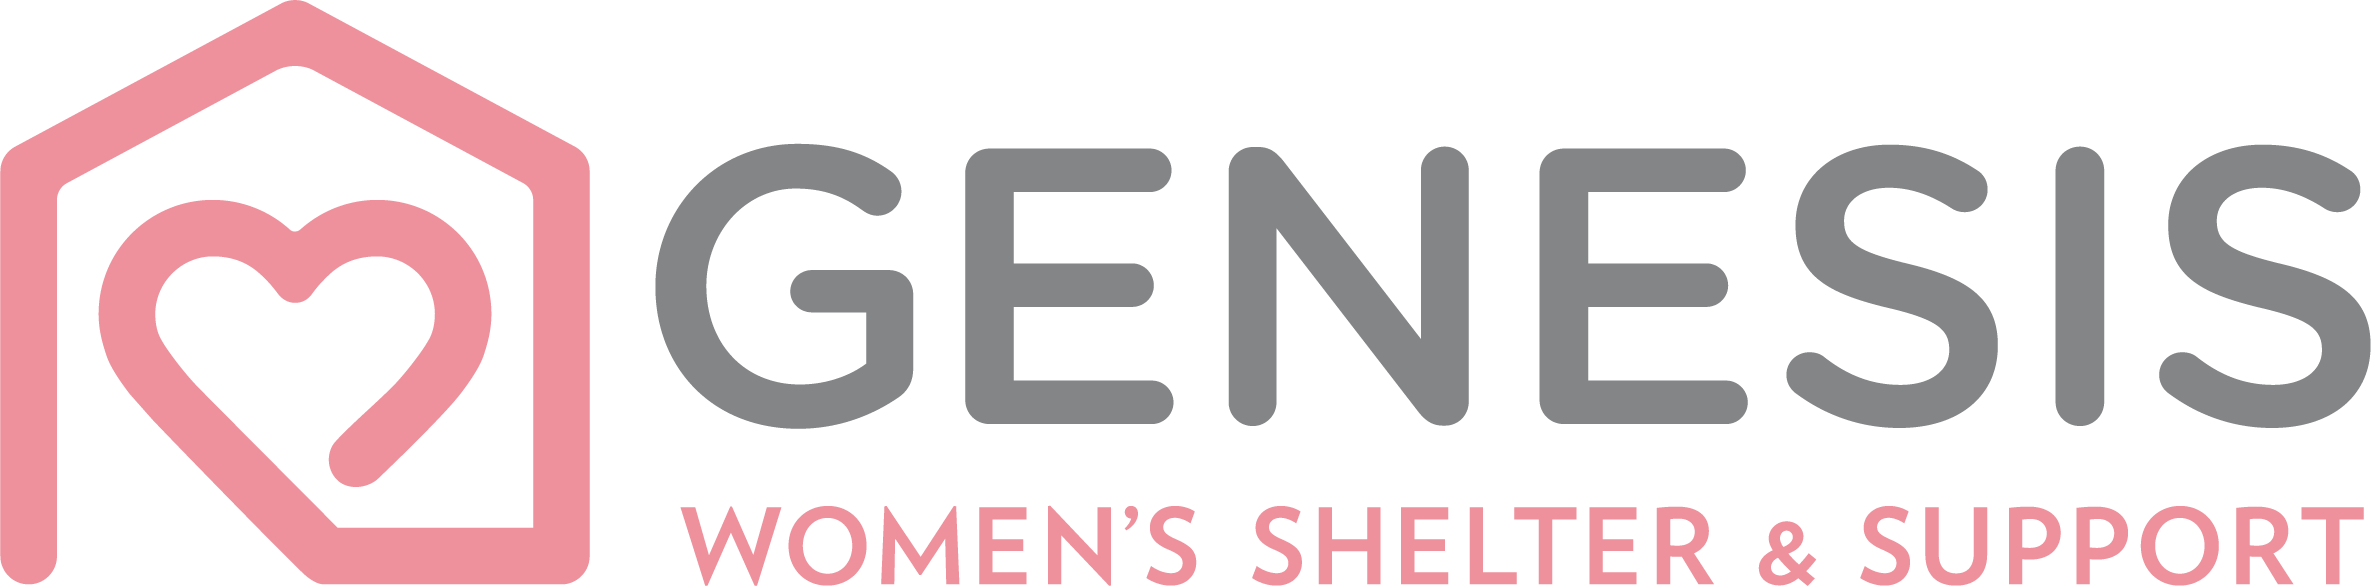 Genesis Women's Shelter & Support